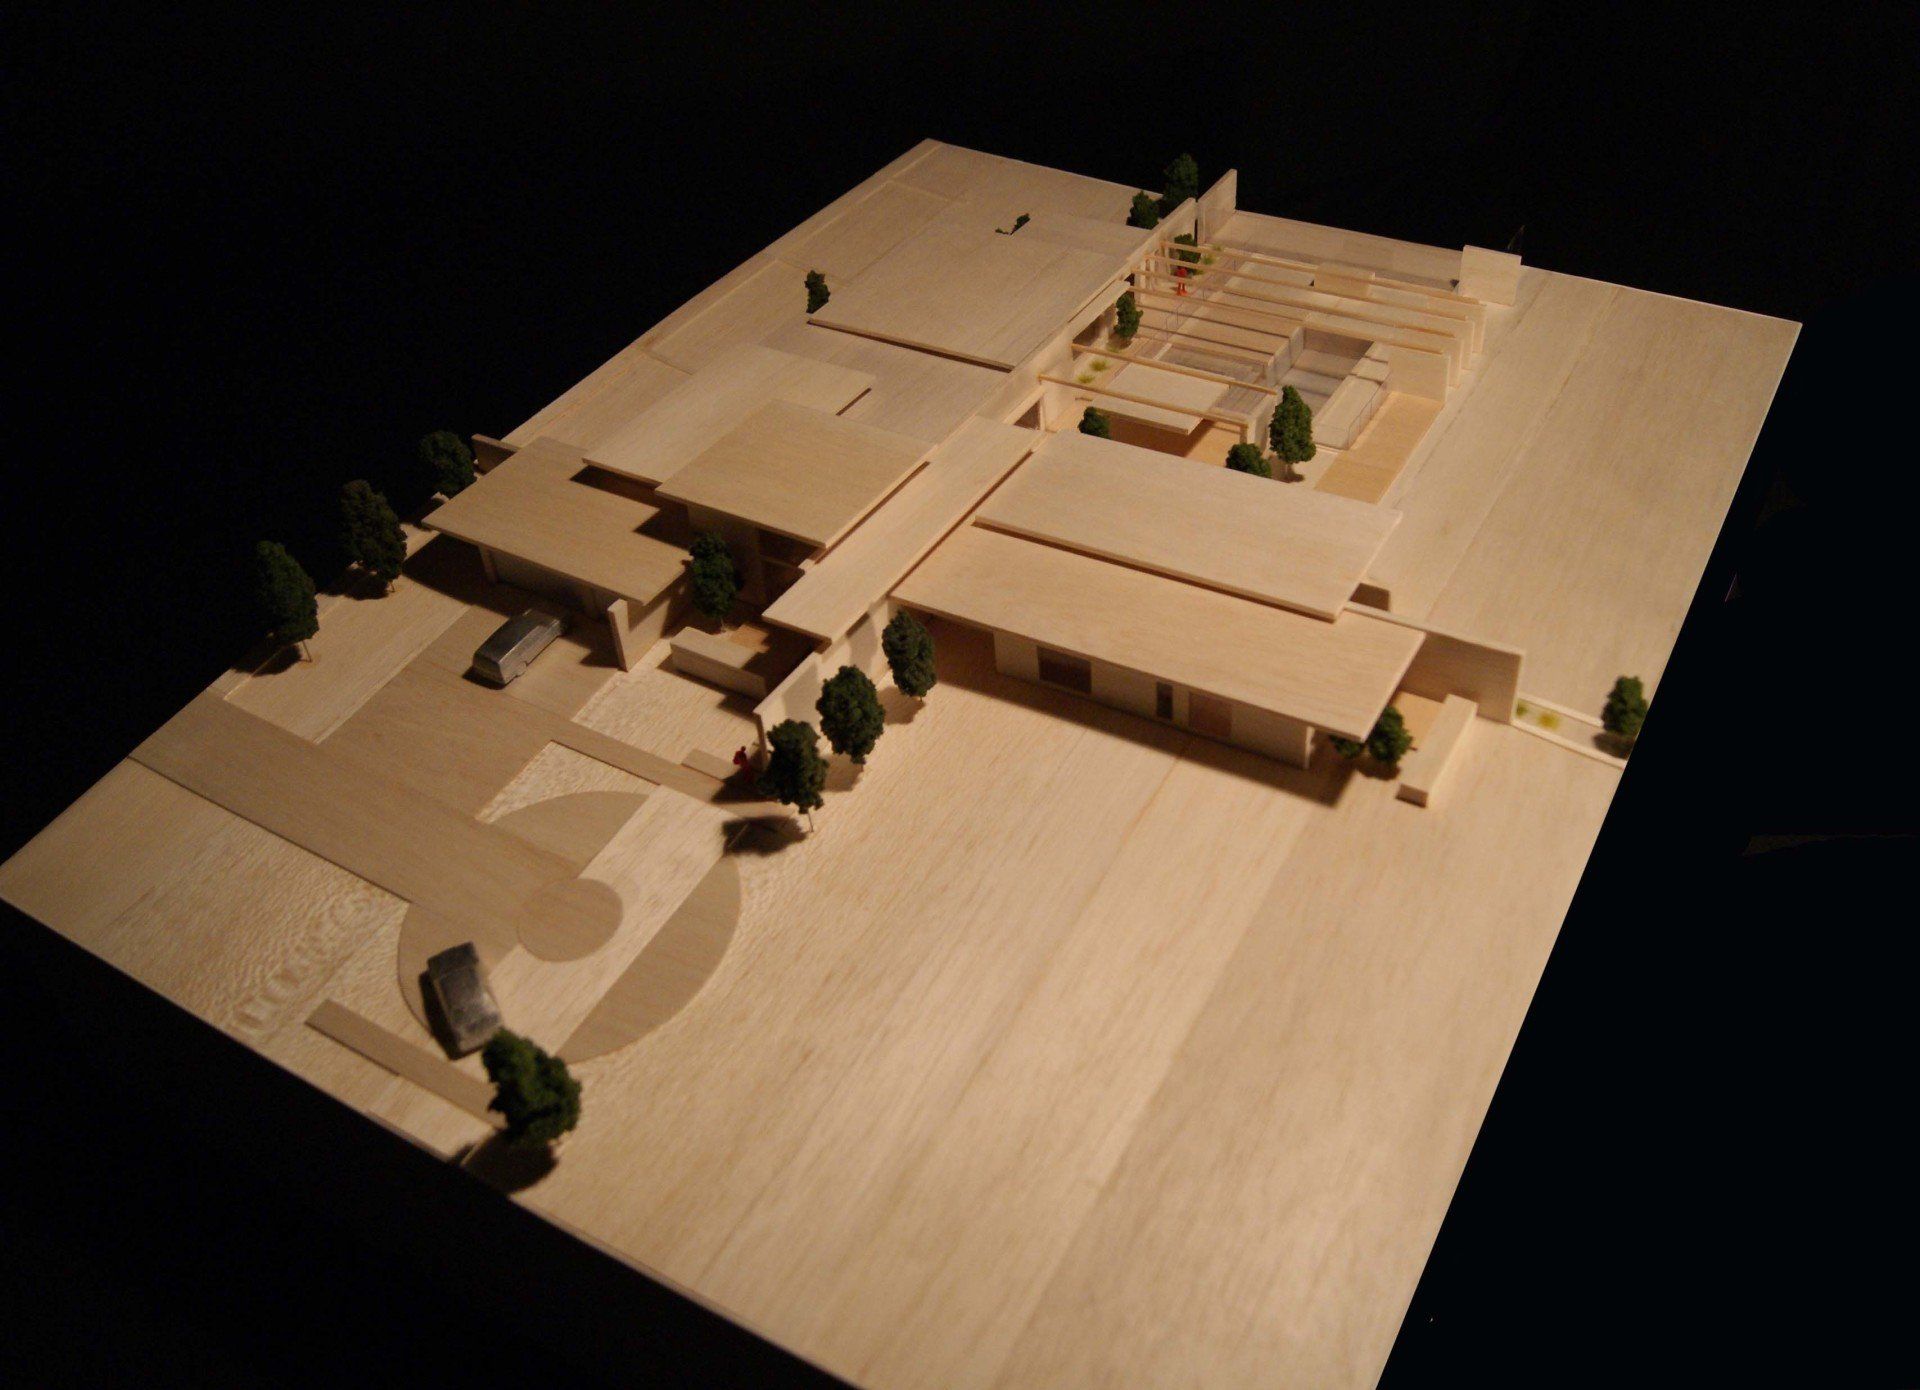 Modelling our new residential custom designed home